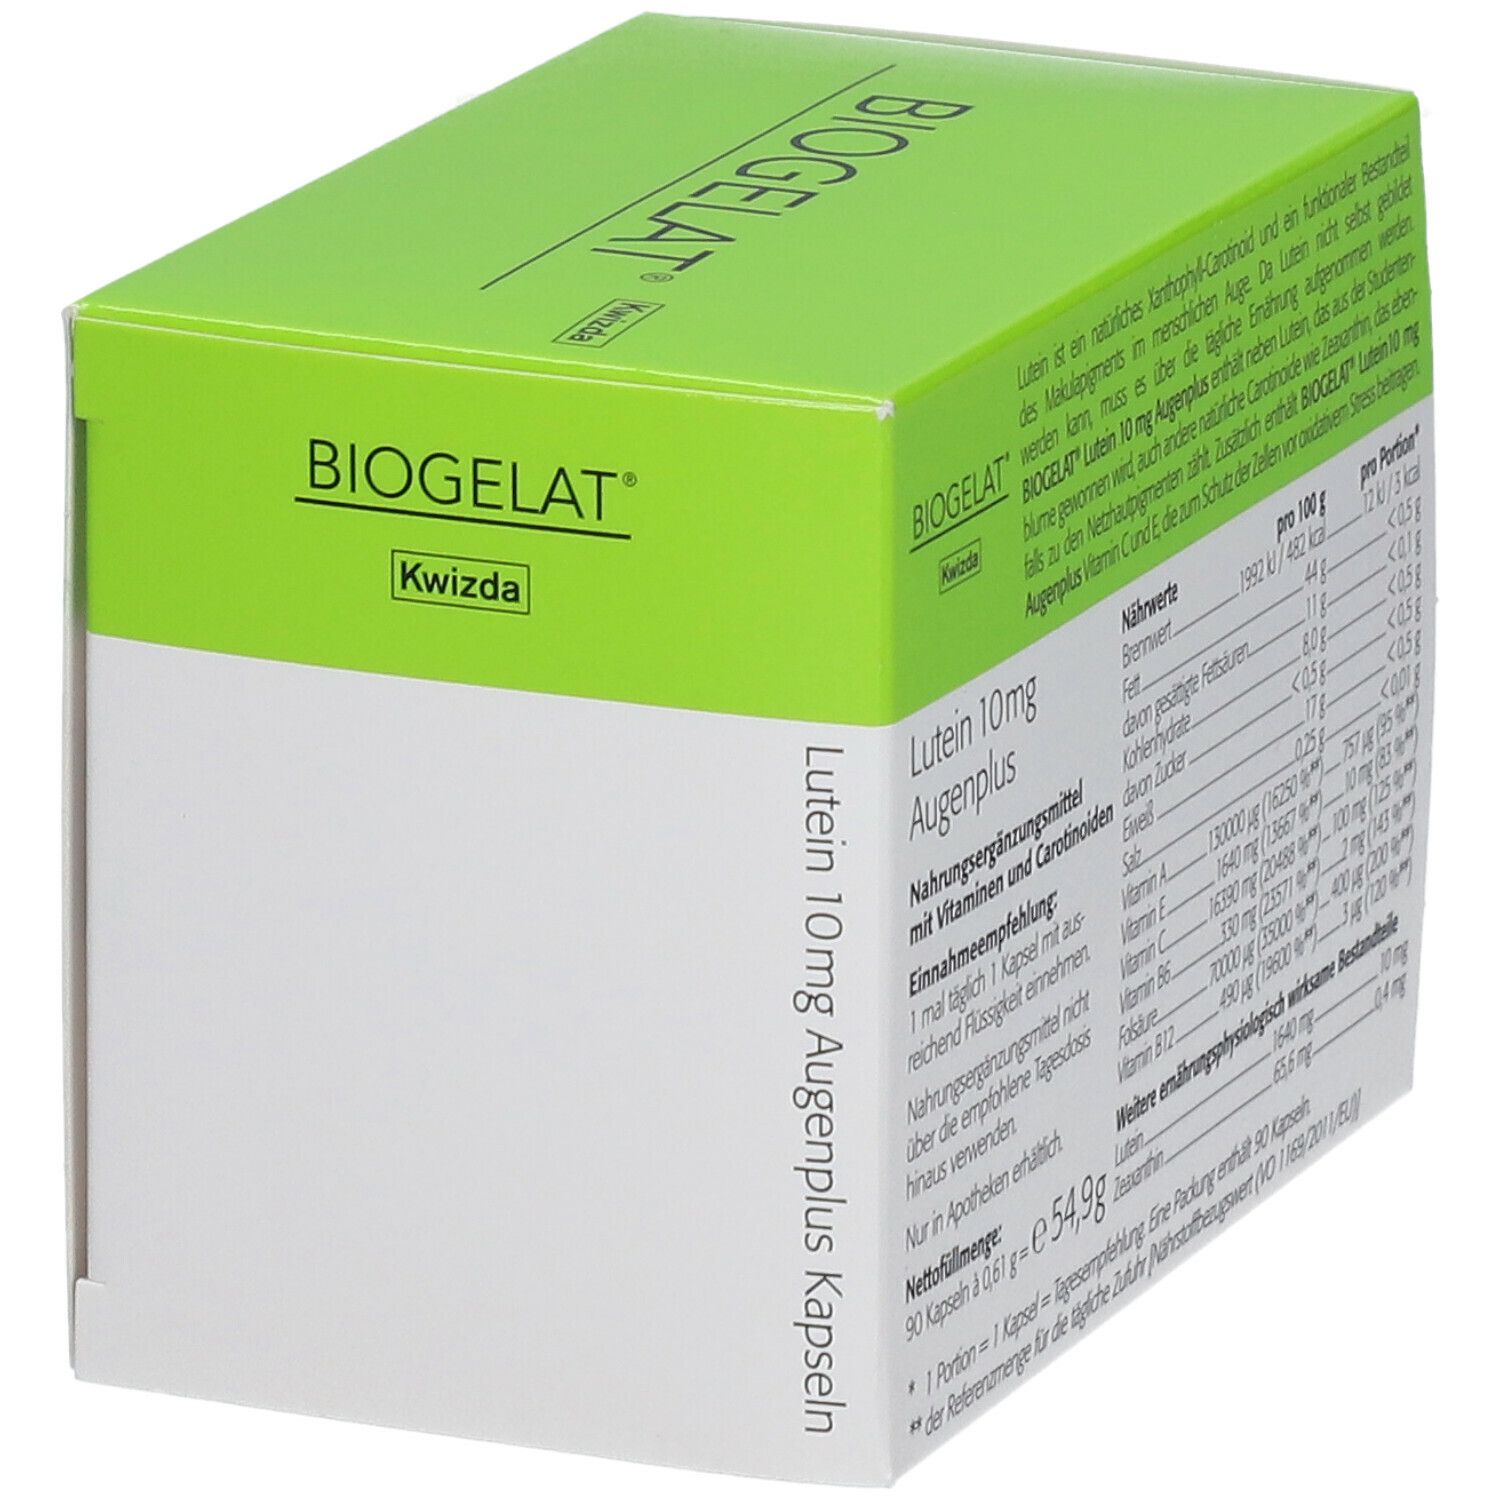 BIOGELAT® 10 mg Augenplus